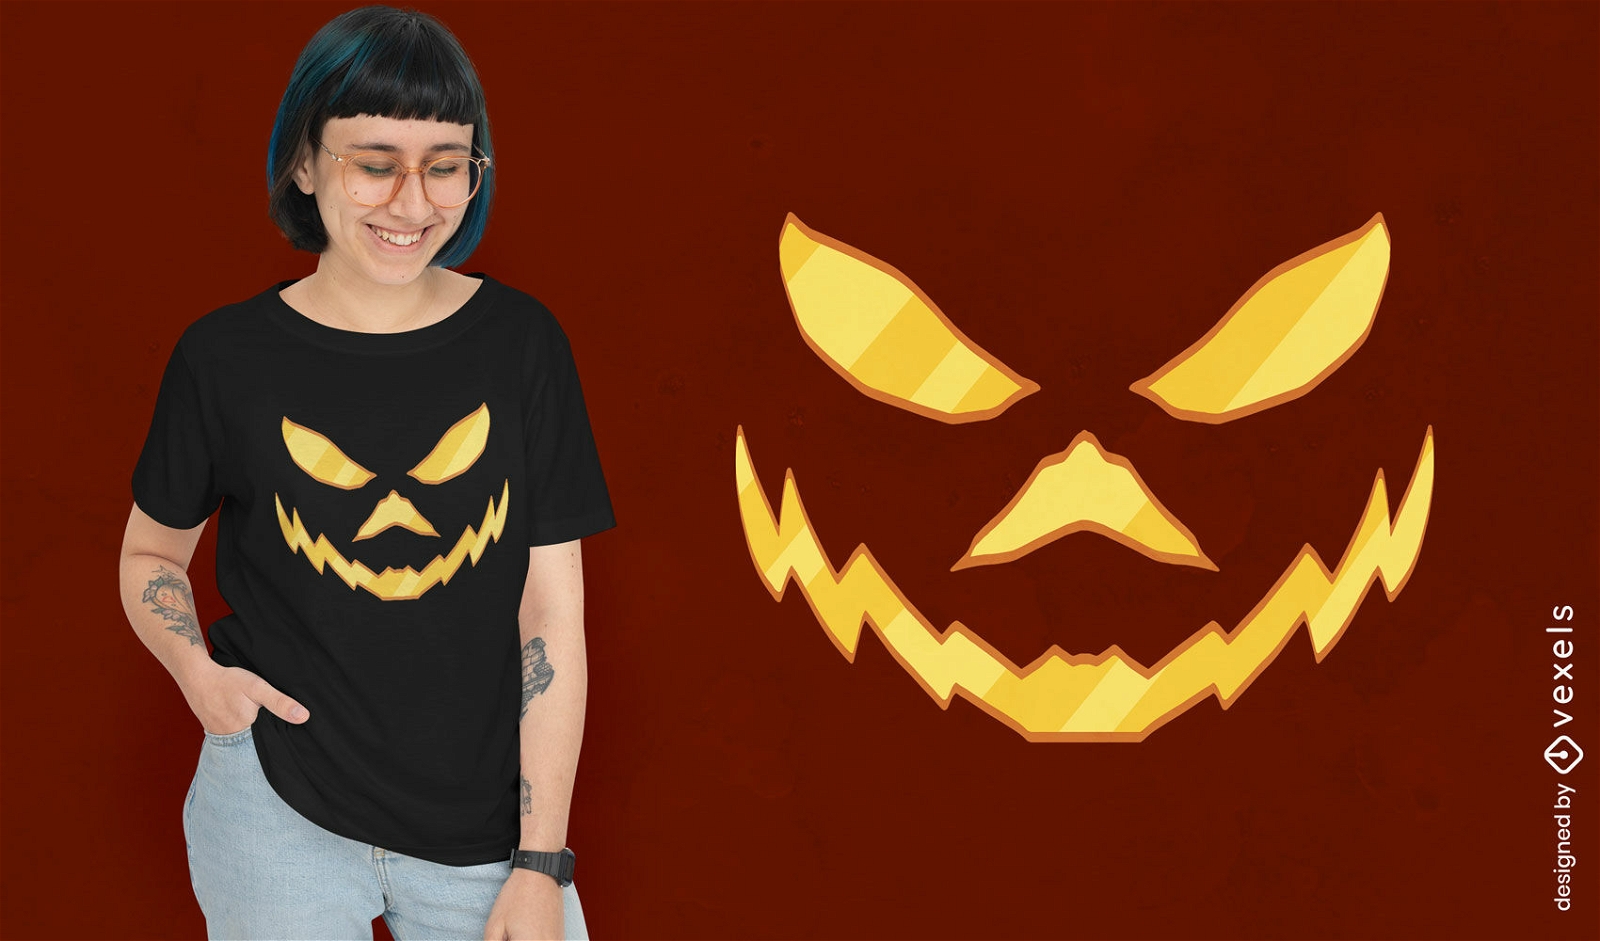 Jack O' lantern face t-shirt design